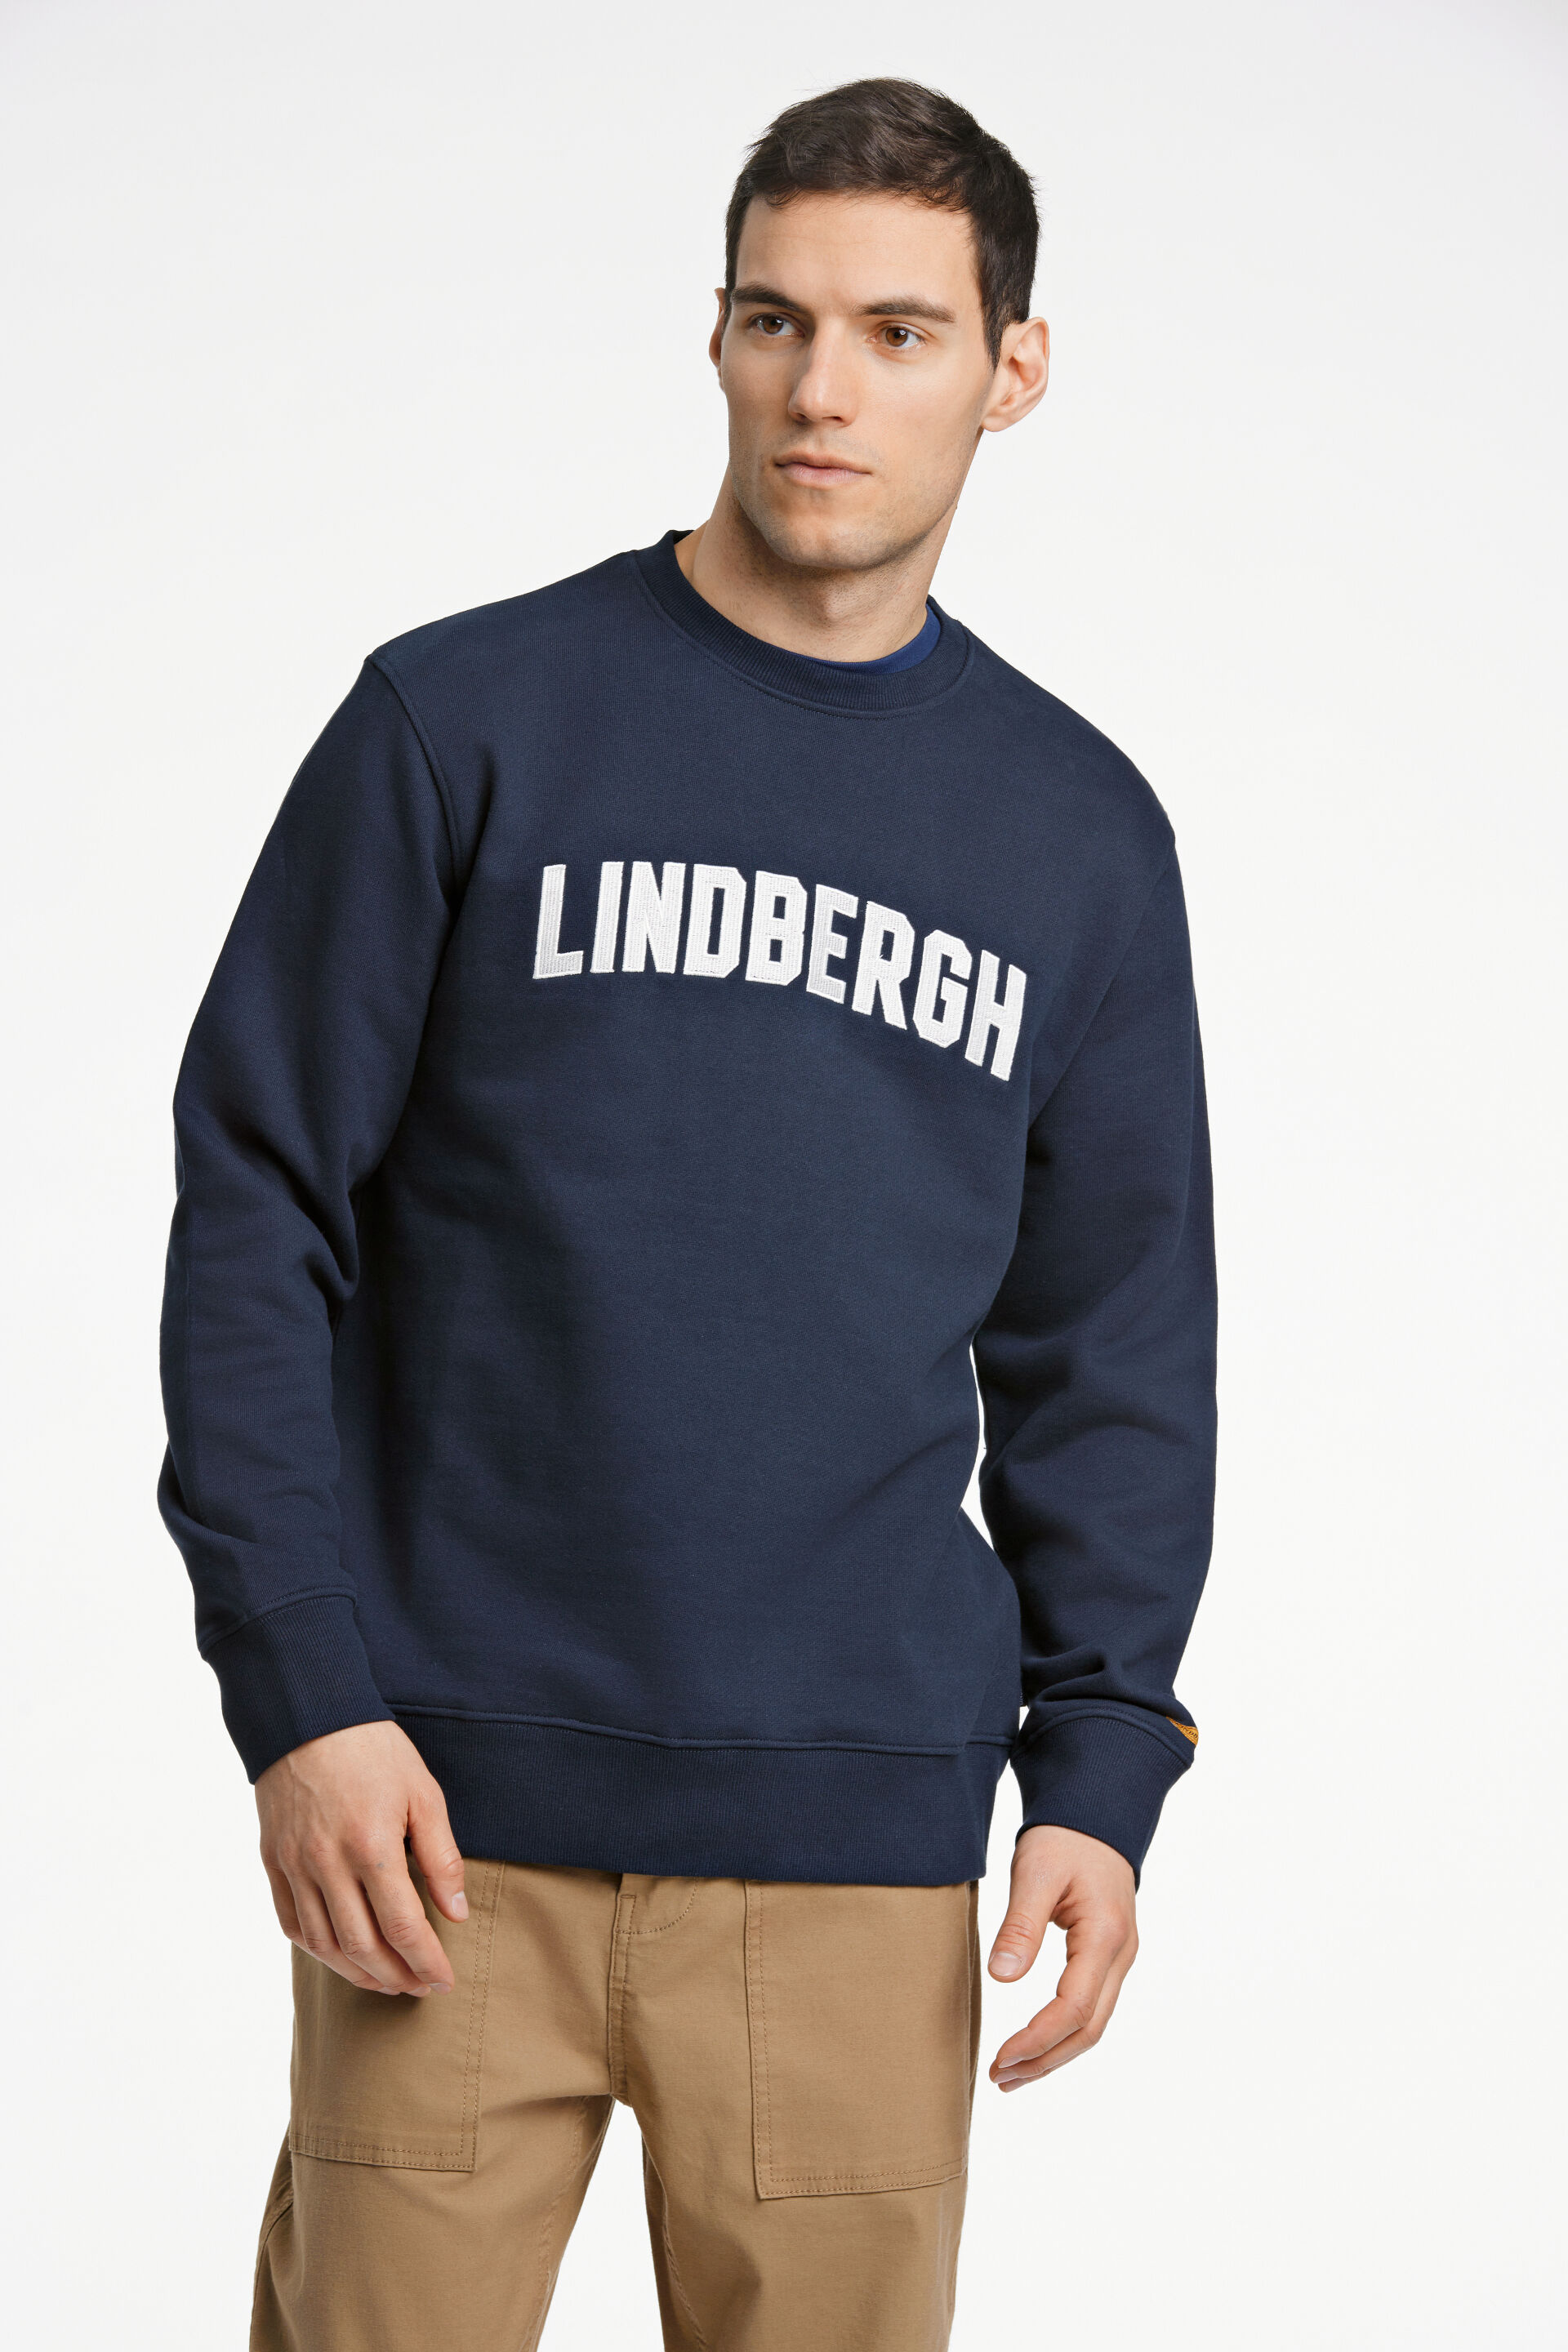 Lindbergh  Sweatshirt Blå 30-724050